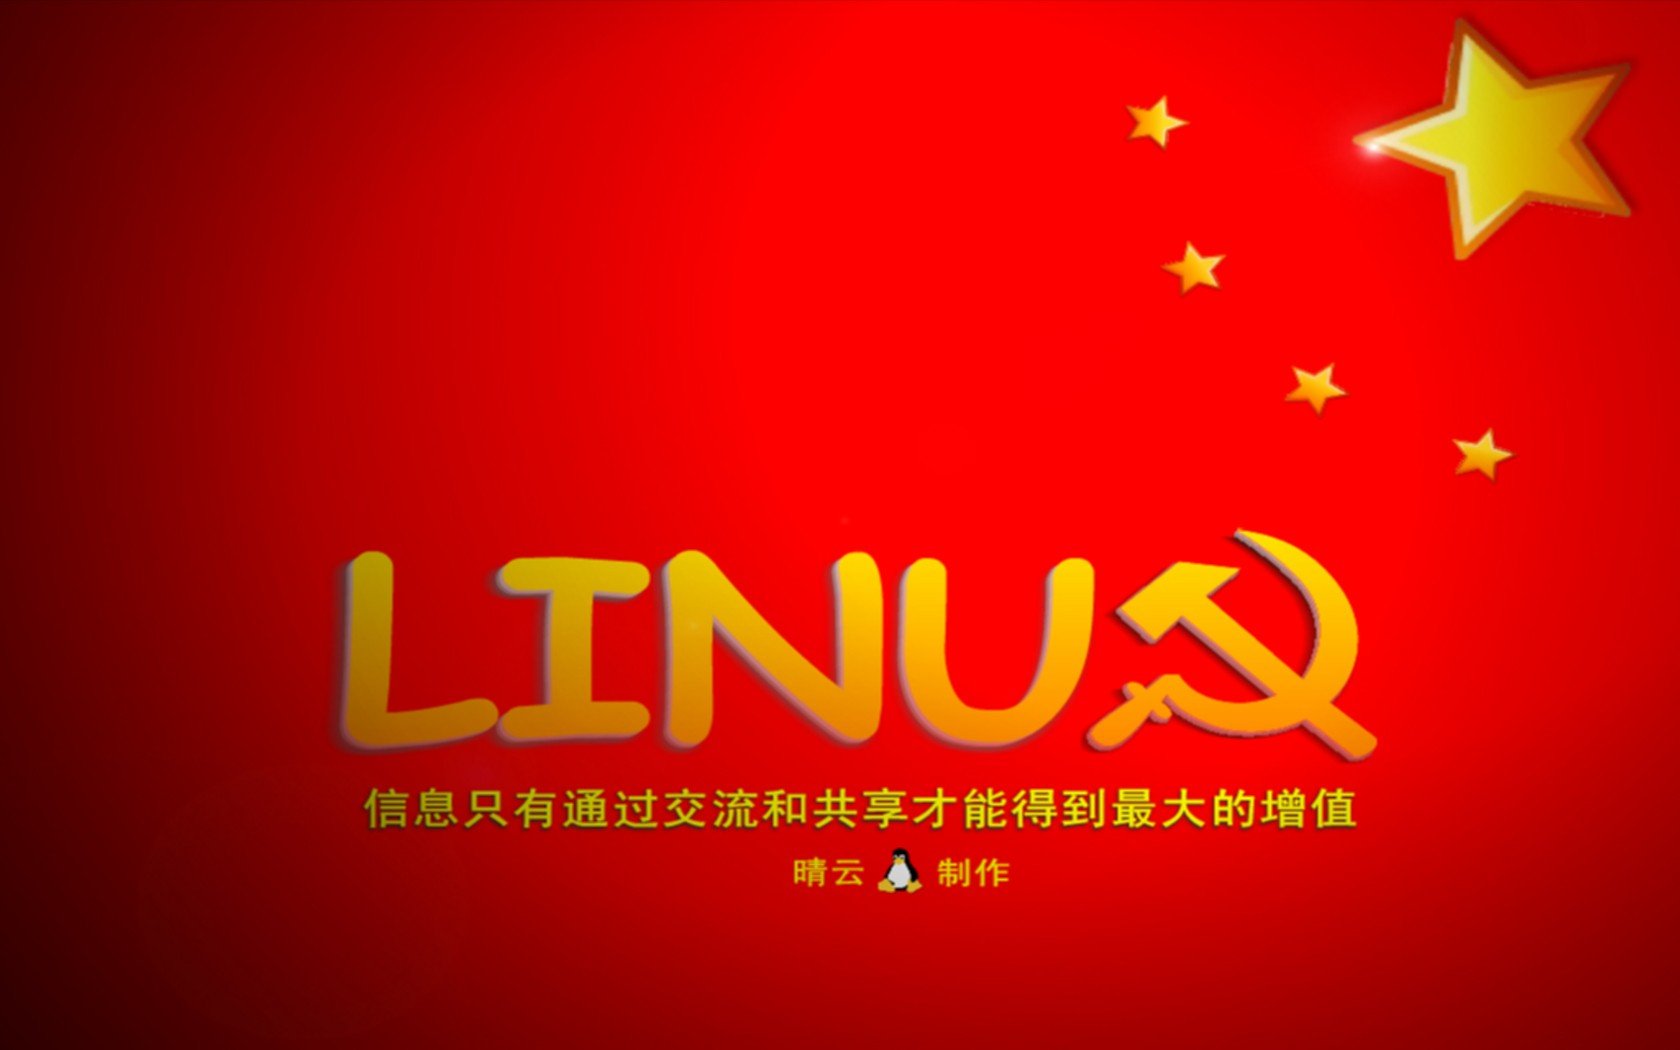 communism, Linux, Red background Wallpaper